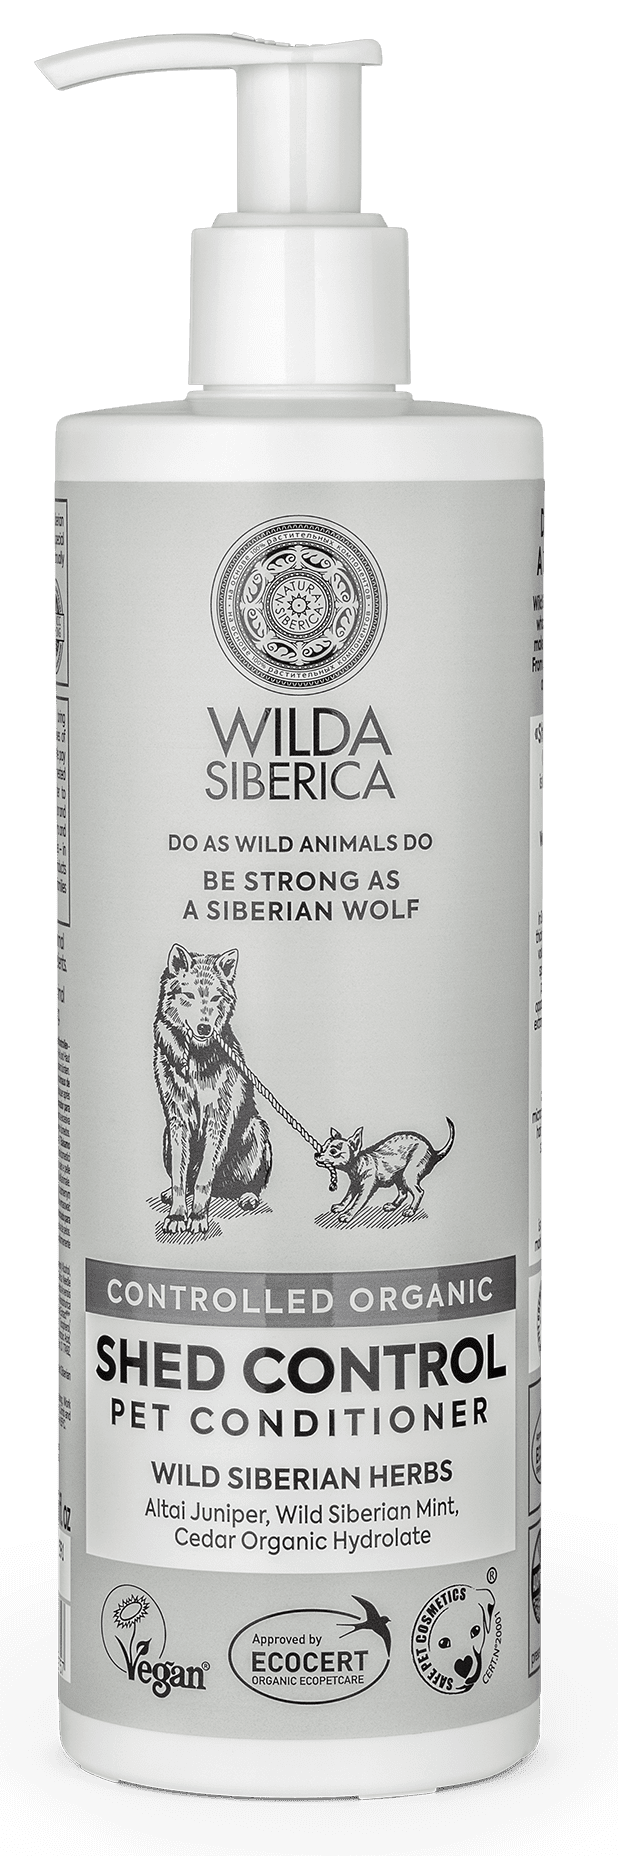 Wilda Siberica 400ml – Shed control conditioner